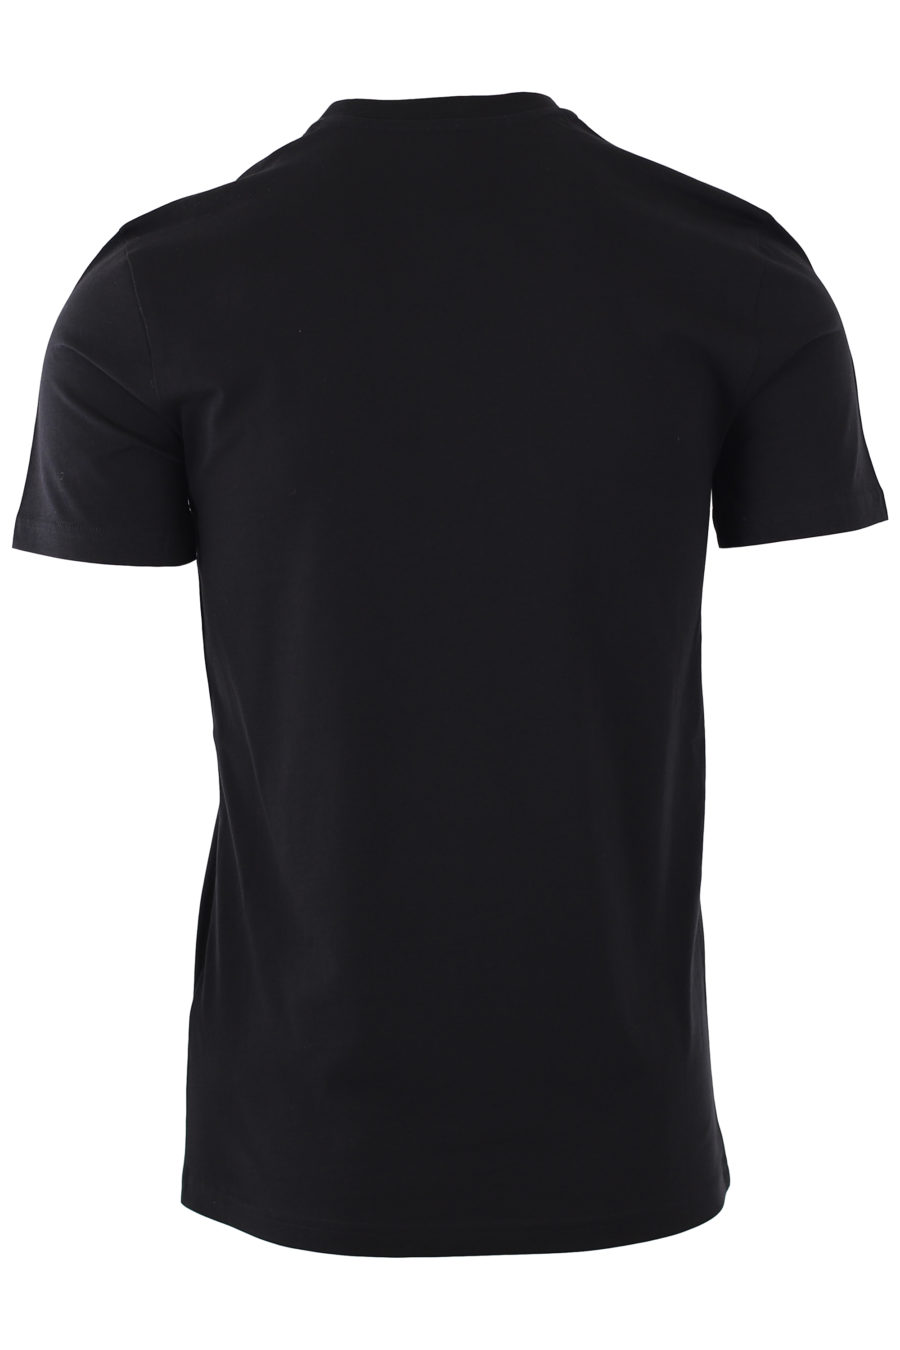 Black T-shirt with white "fantasy" logo - IMG 9288